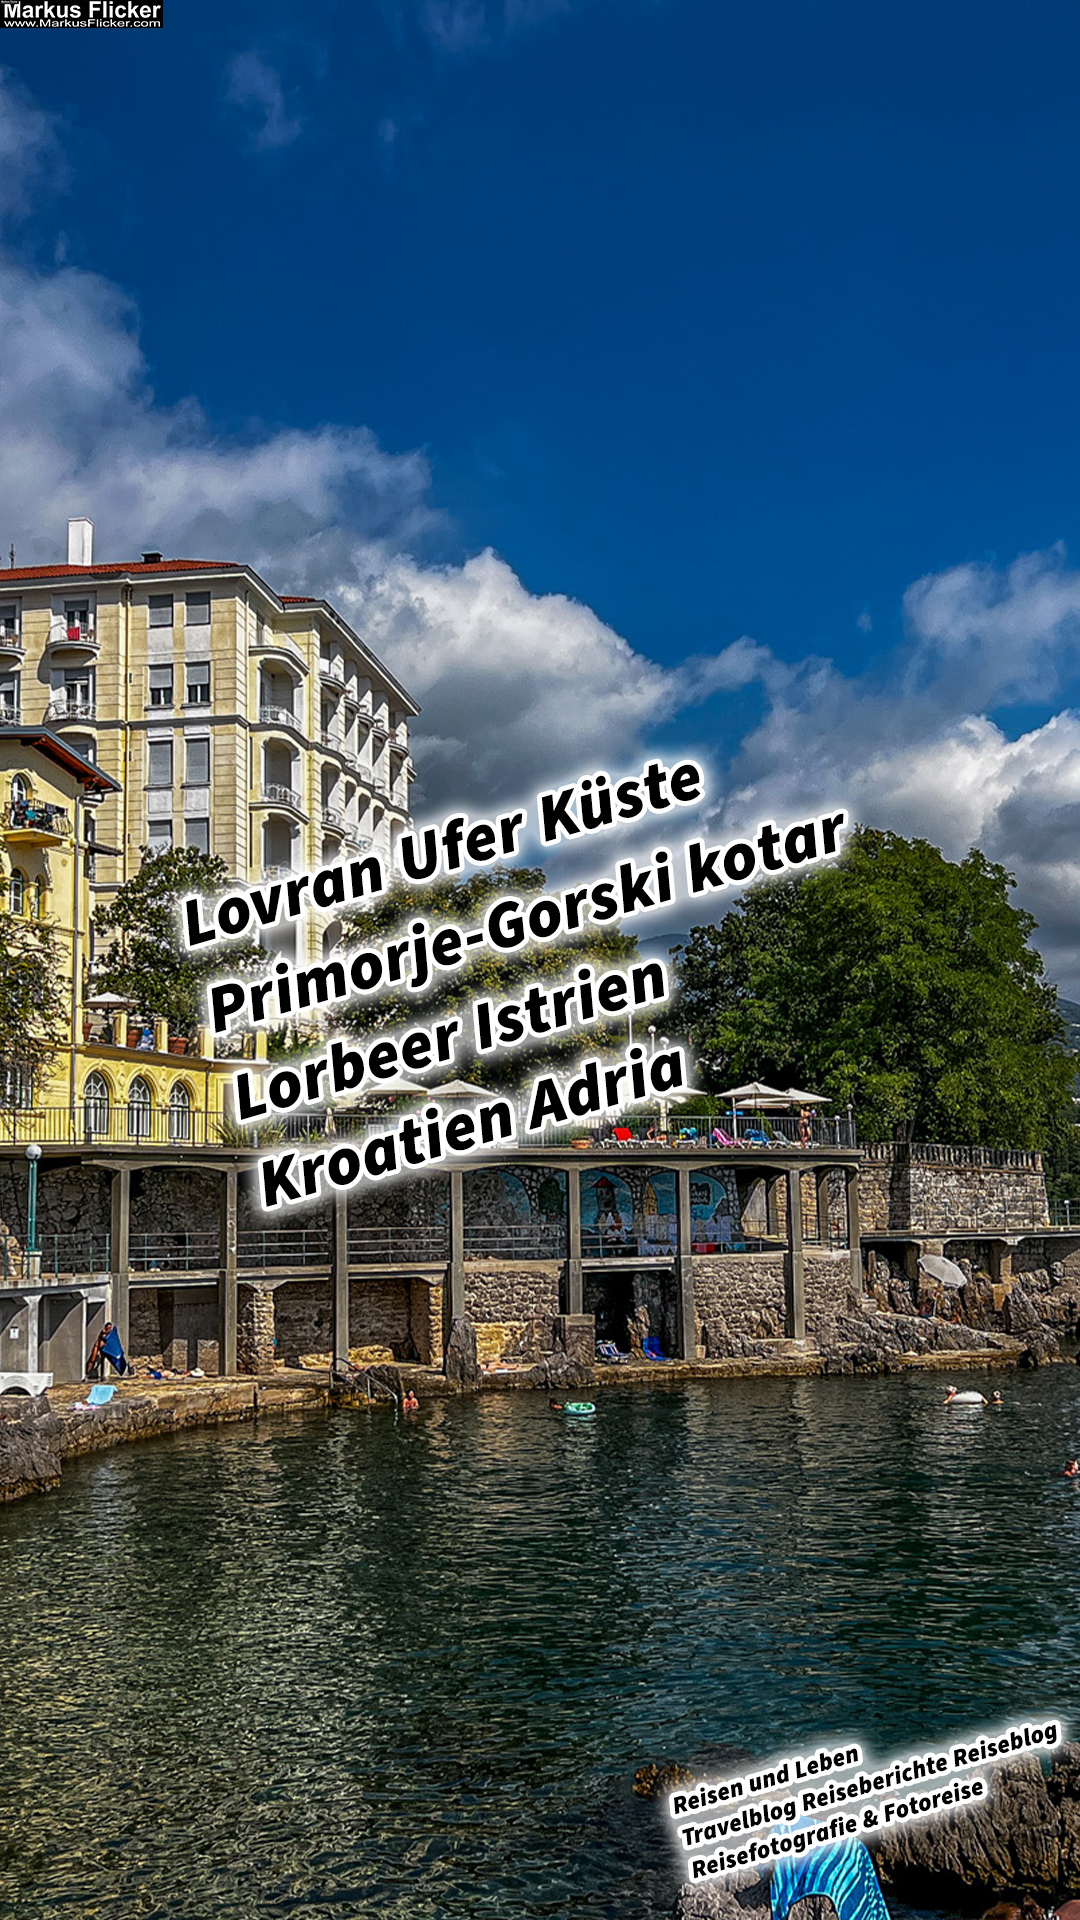 Lovran Ufer Küste Primorje-Gorski kotar Lorbeer Istrien Kroatien Adria #visitcroatia #visitlovran